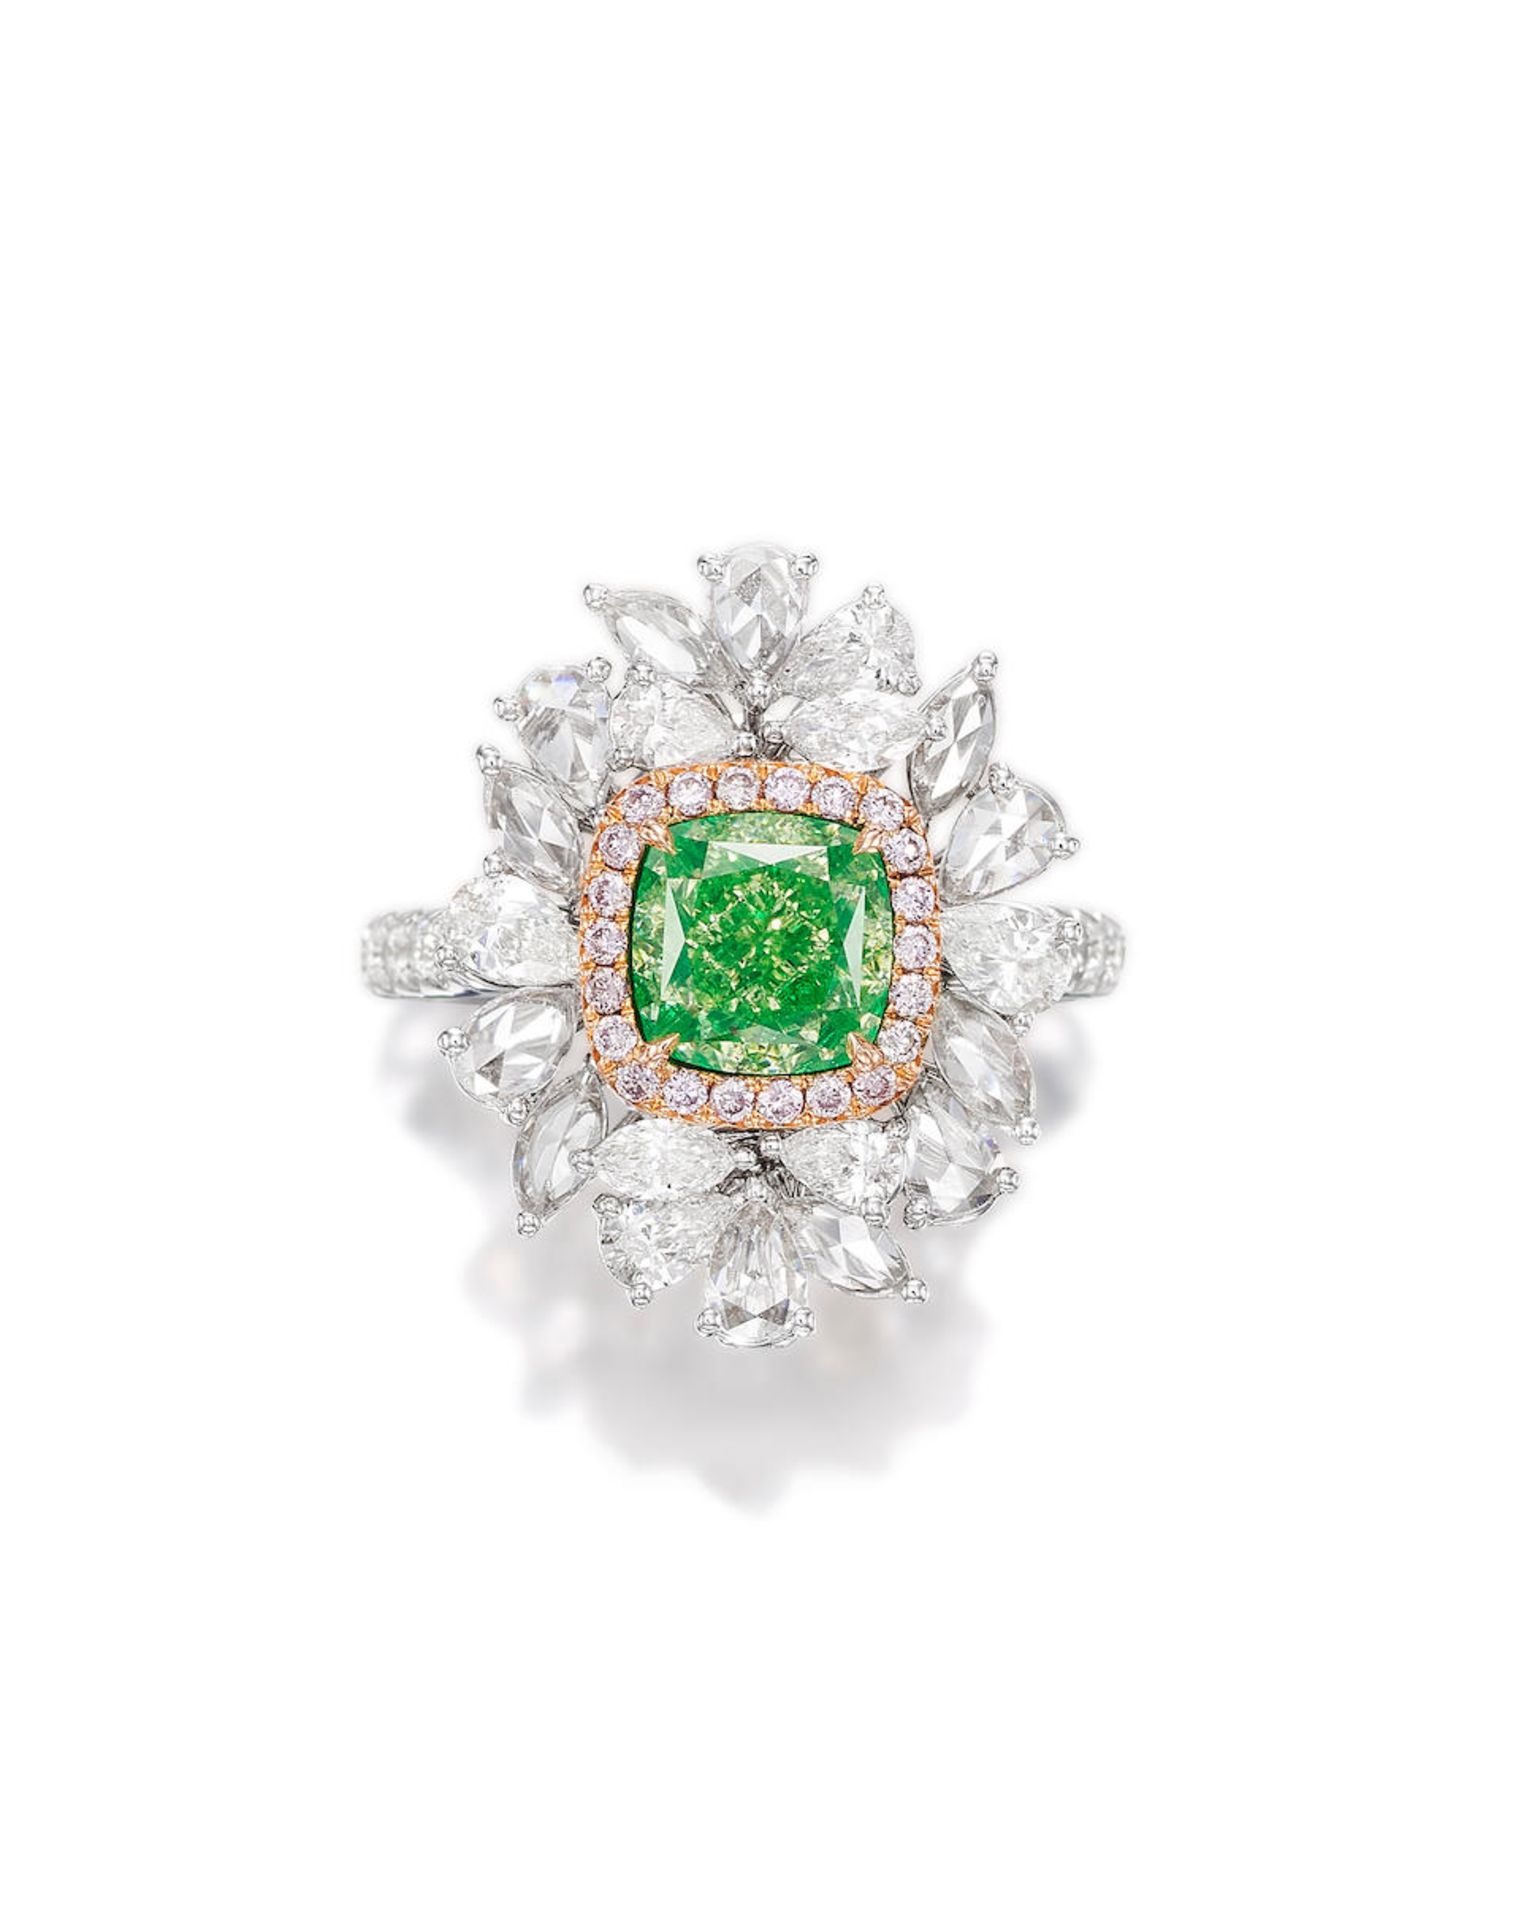 FANCY GREEN-YELLOW DIAMOND, COLOURED DIAMOND AND DIAMOND RING/PENDANT